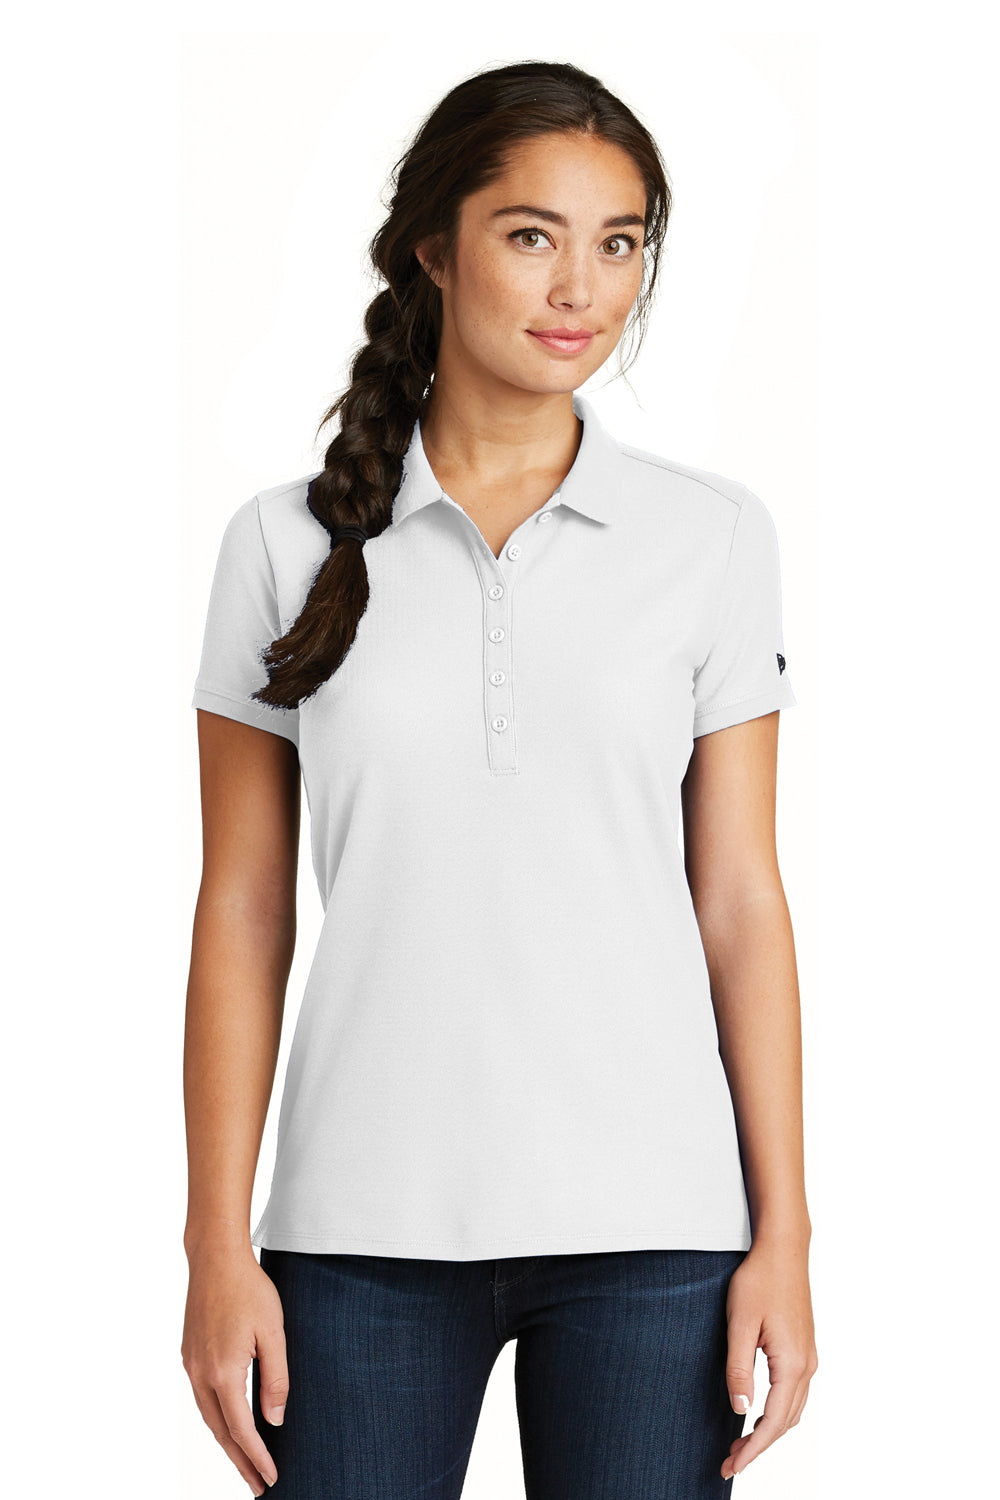 New Era LNEA300 Womens Venue Home Plate Moisture Wicking Short Sleeve Polo Shirt White Front